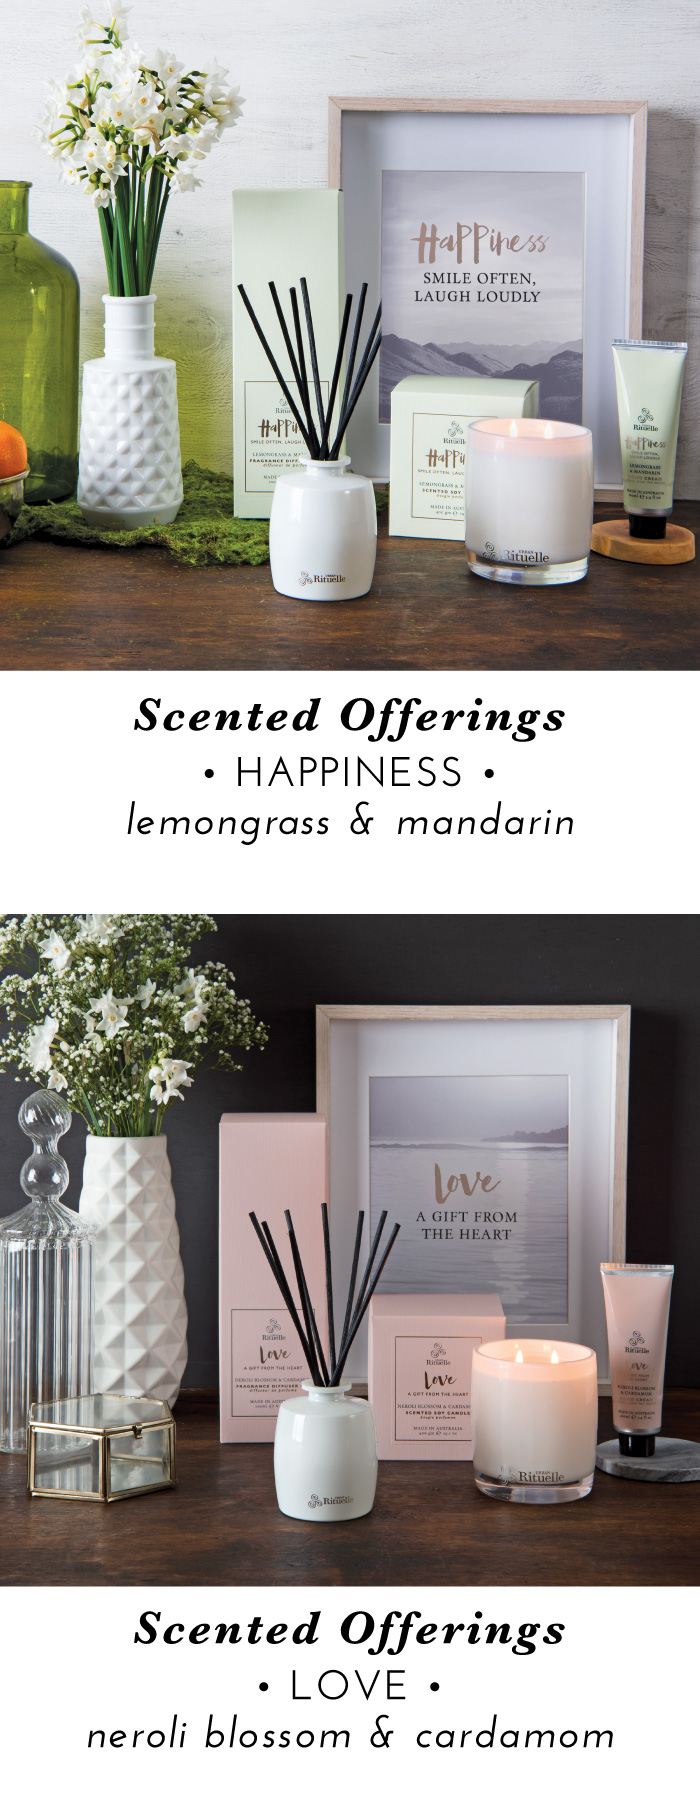 Happiness: Lemongrass & Mandarin. Love: Neroli Blossom & Cardamom